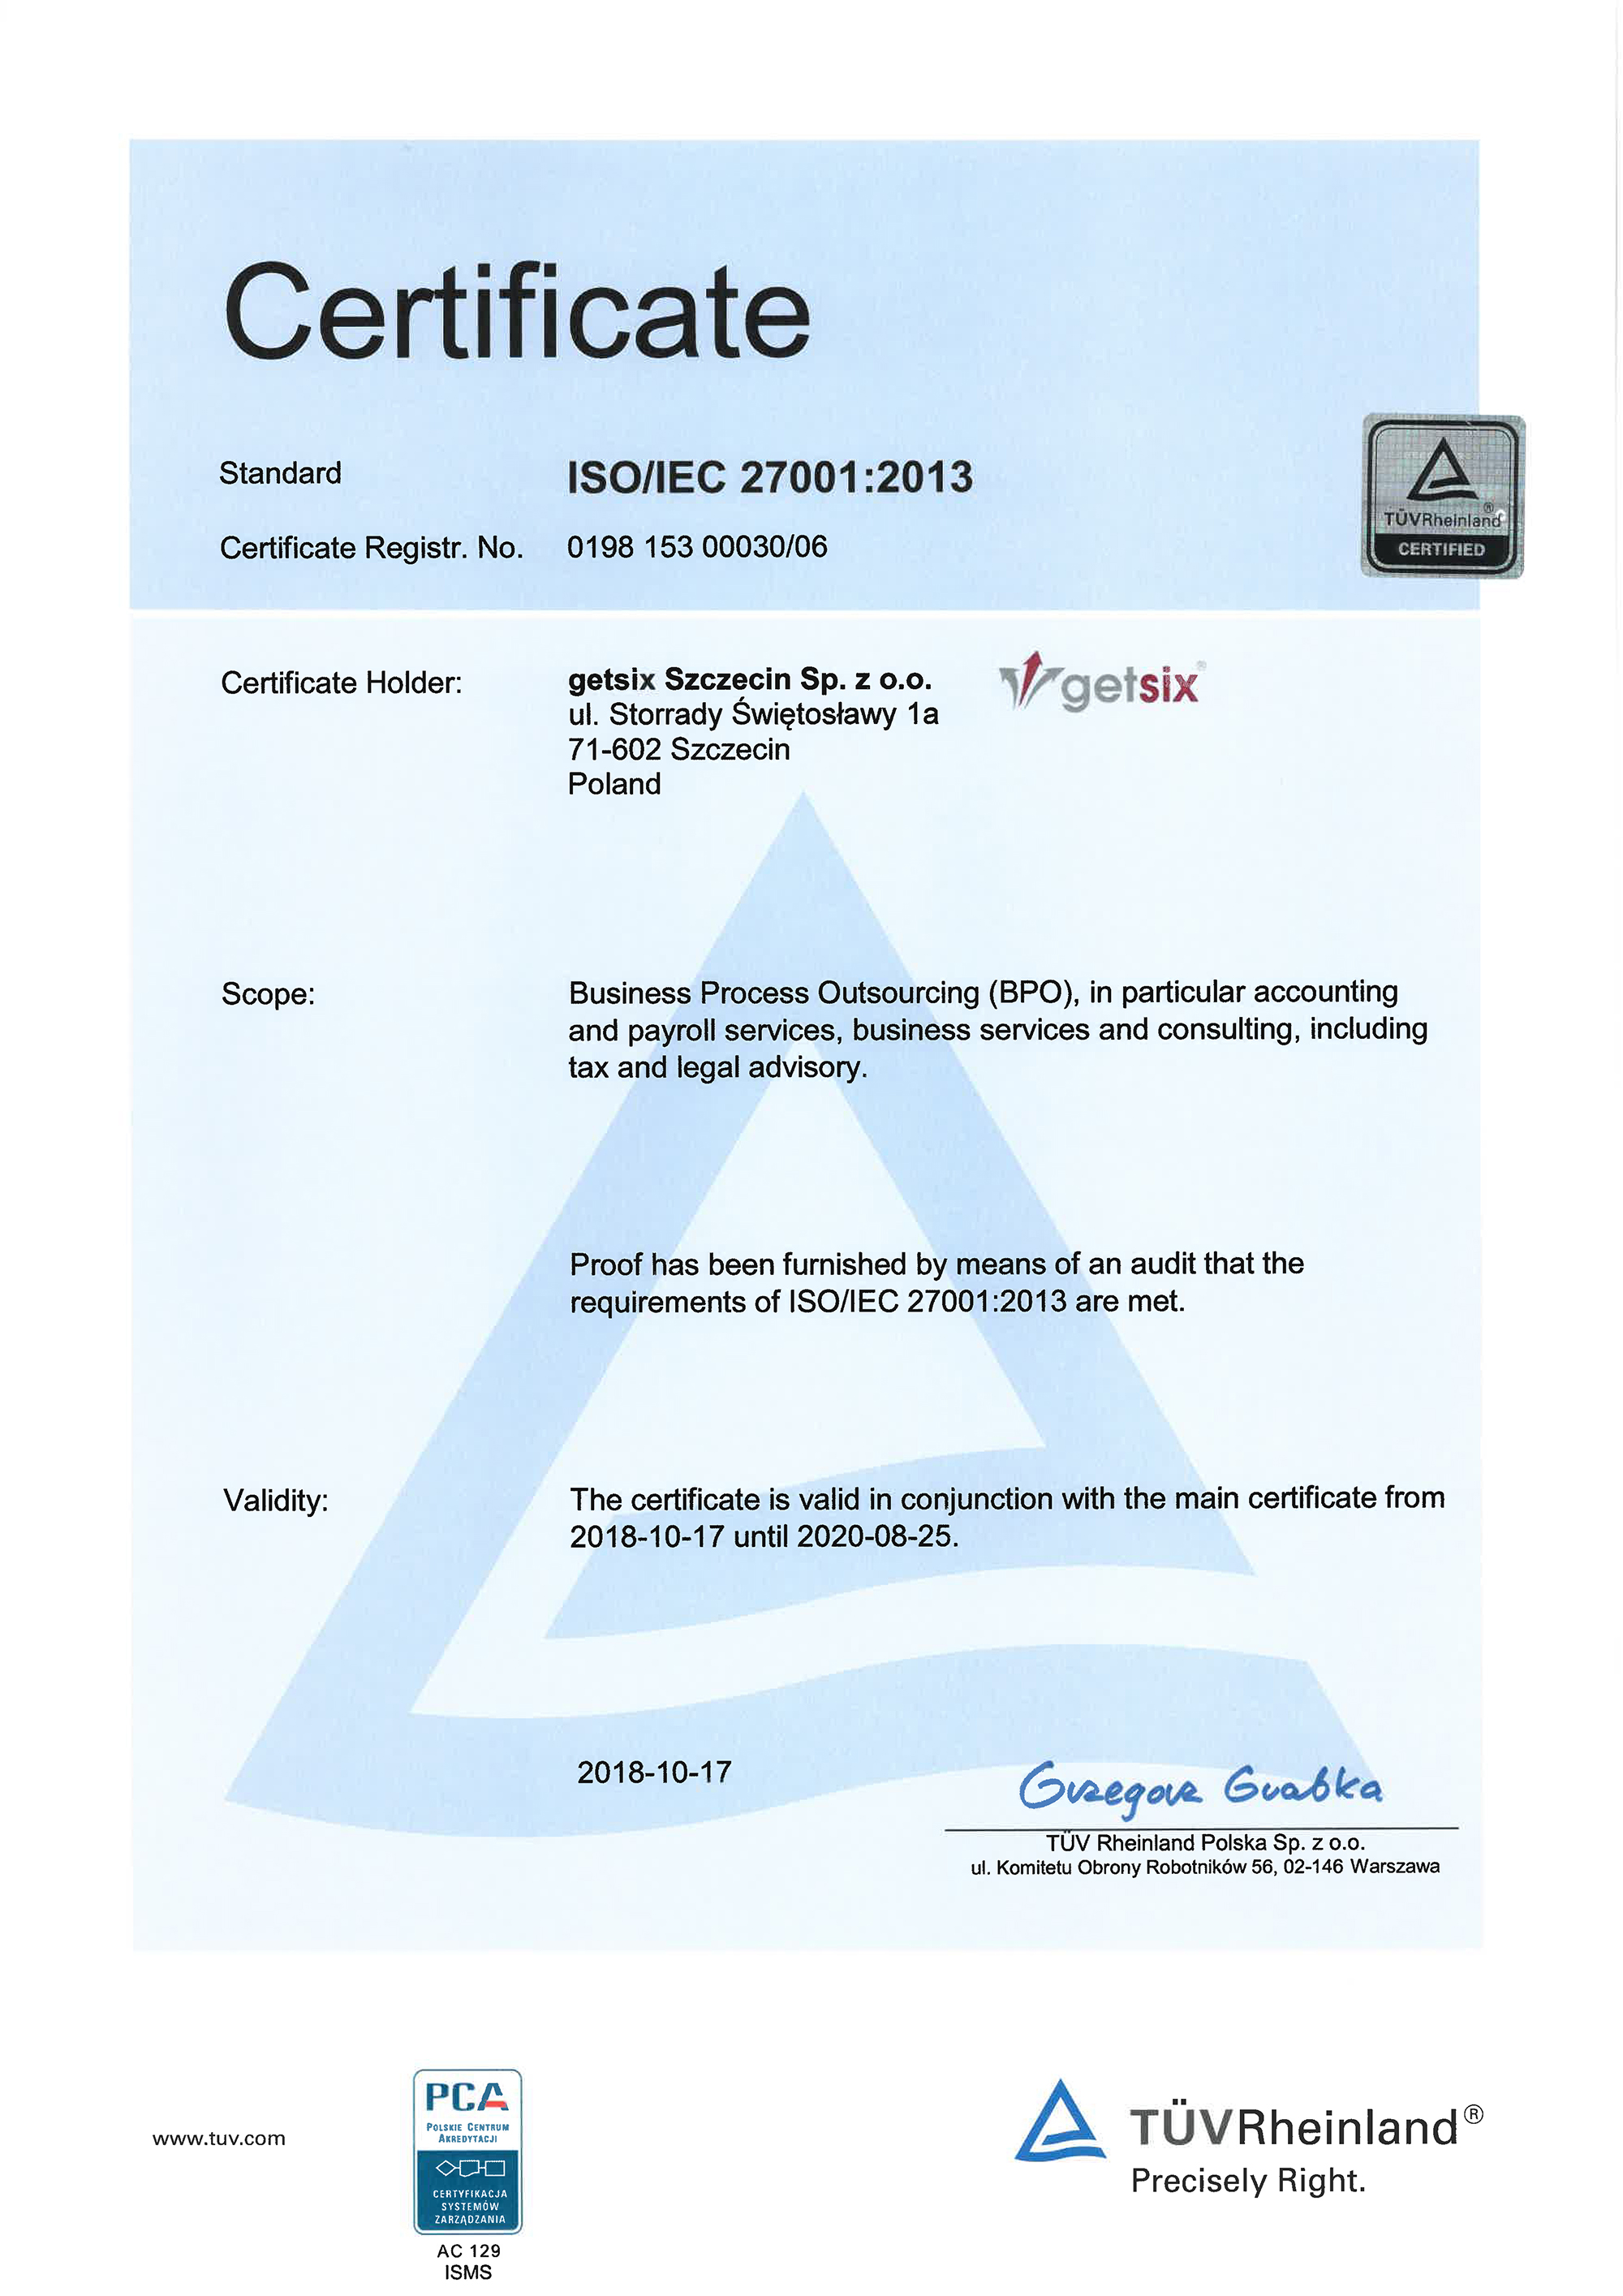 ISO/IEC 27001:2013 certificate